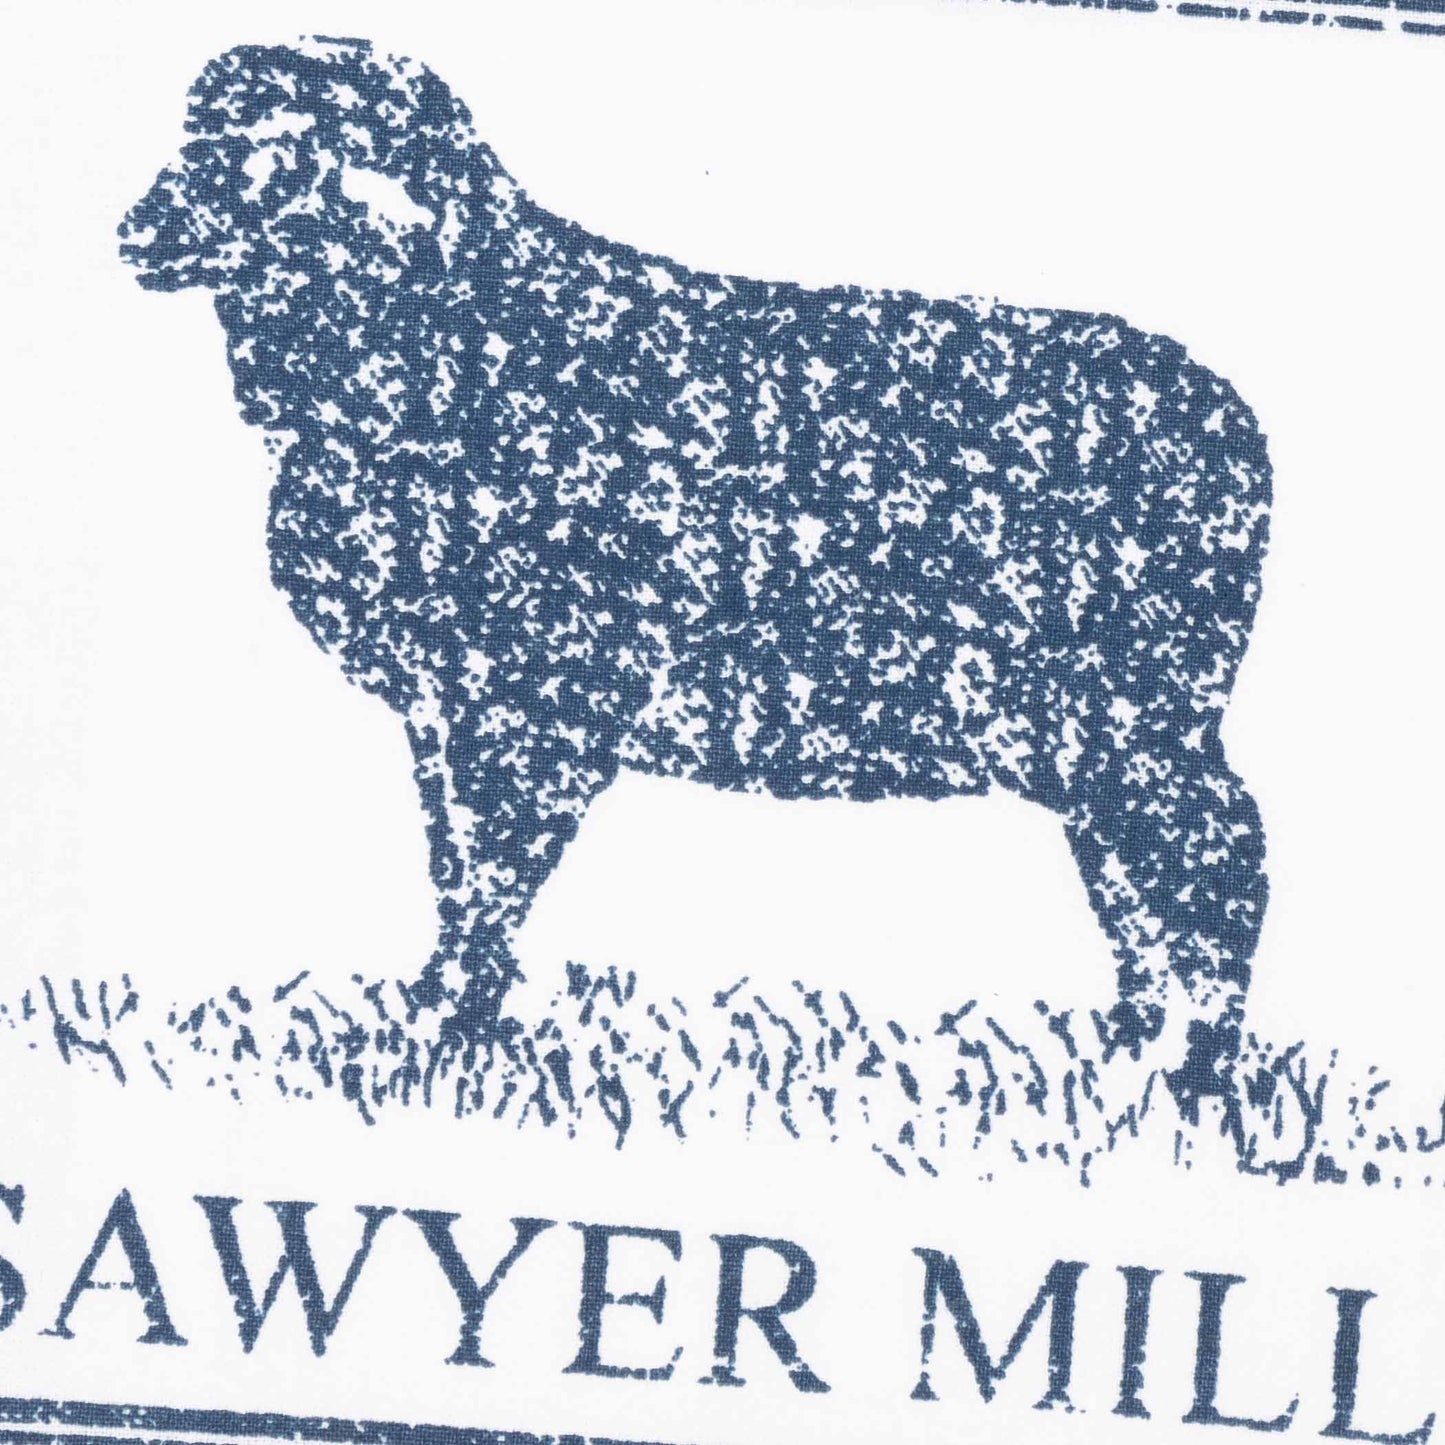 51290-Sawyer-Mill-Blue-Lamb-Muslin-Bleached-White-Tea-Towel-19x28-image-5